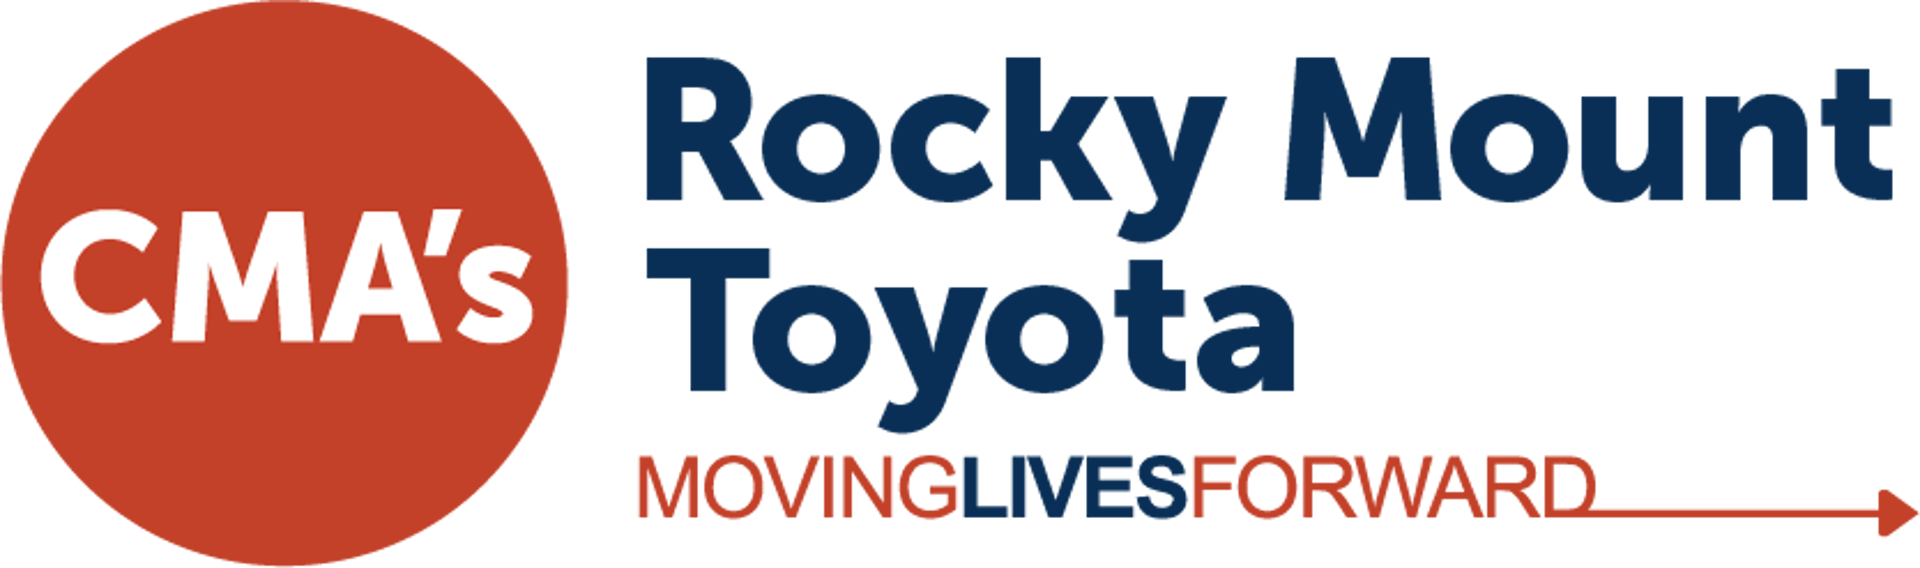 Rocky Mount Toyota